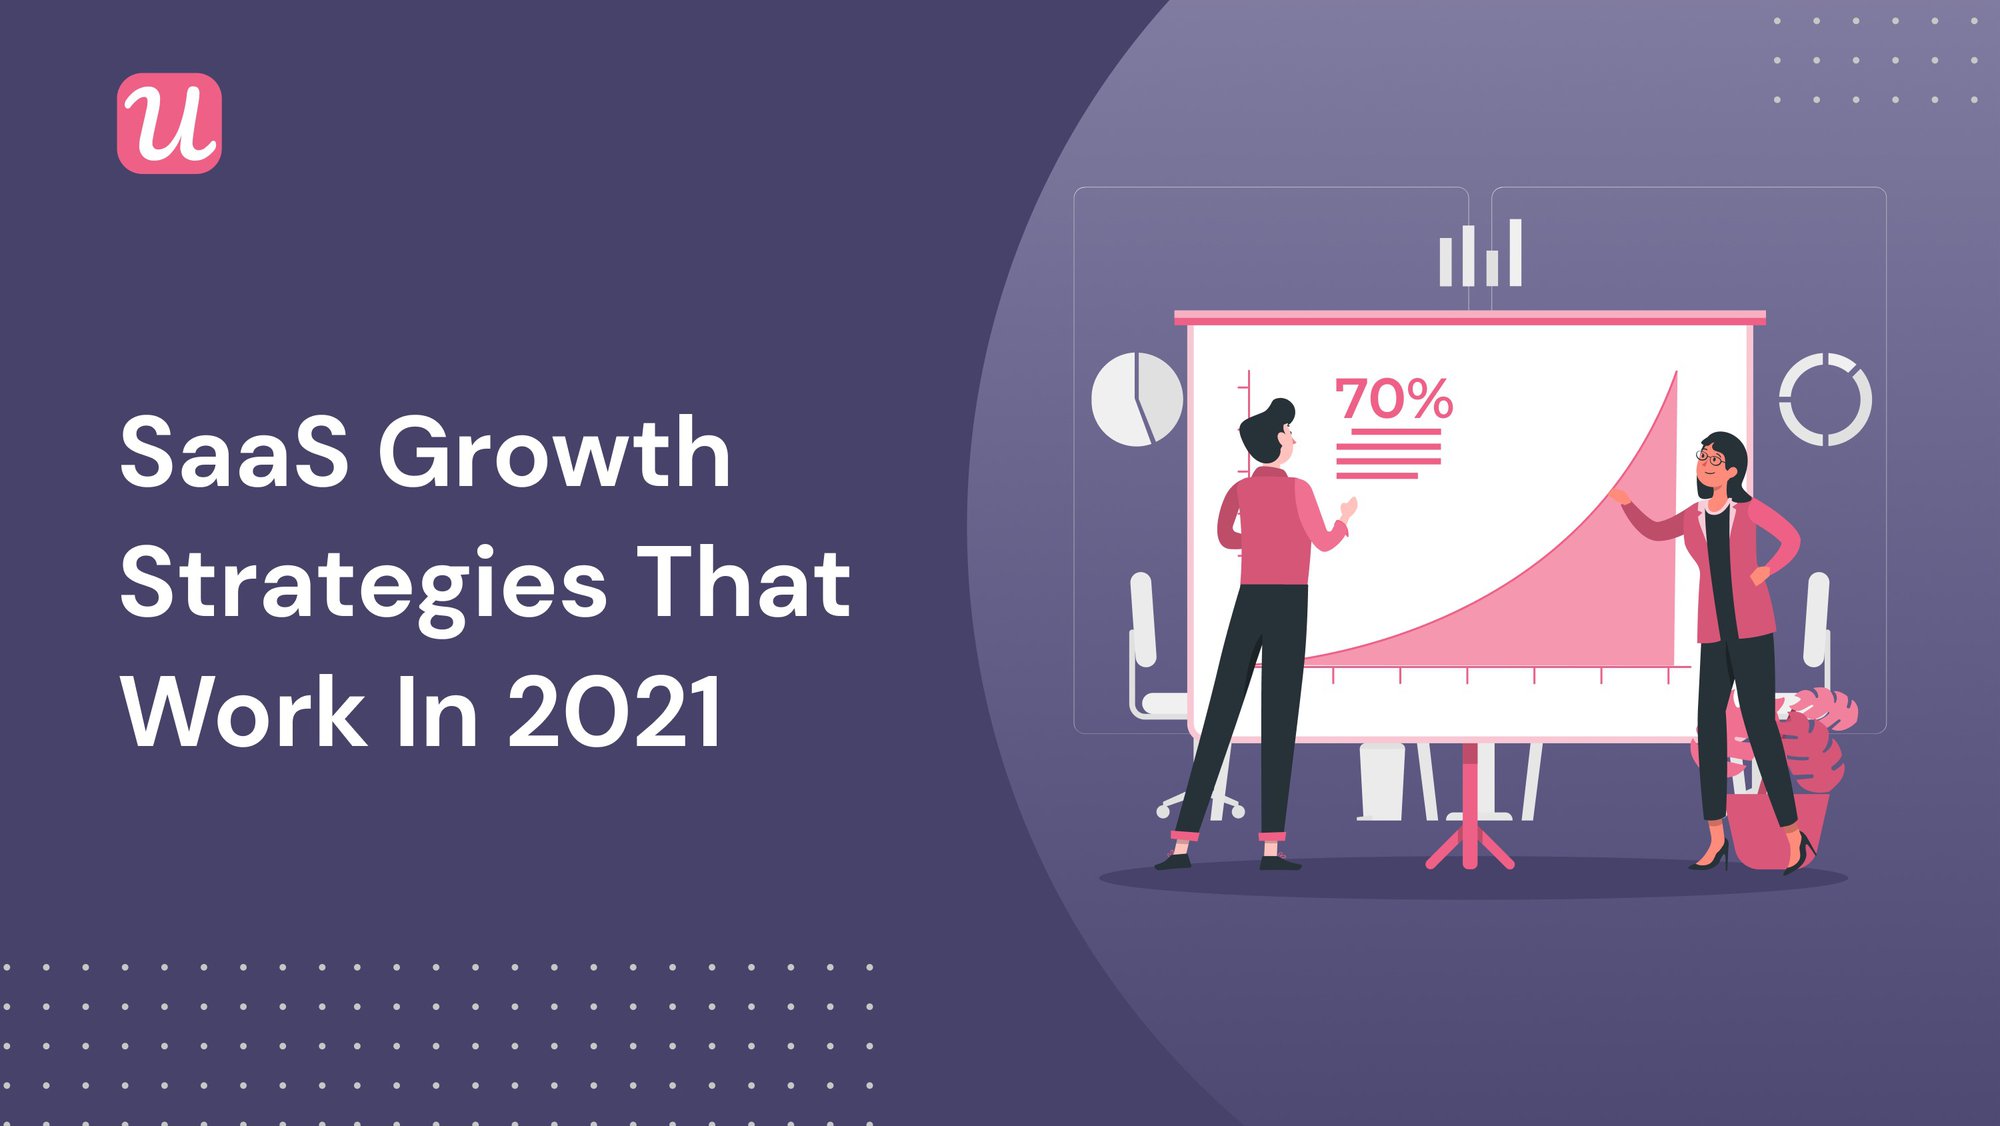 SaaS Growth Strategies That Work in 2021 -  with Aaron Krall, Sujan Patel and Natalie Luneva